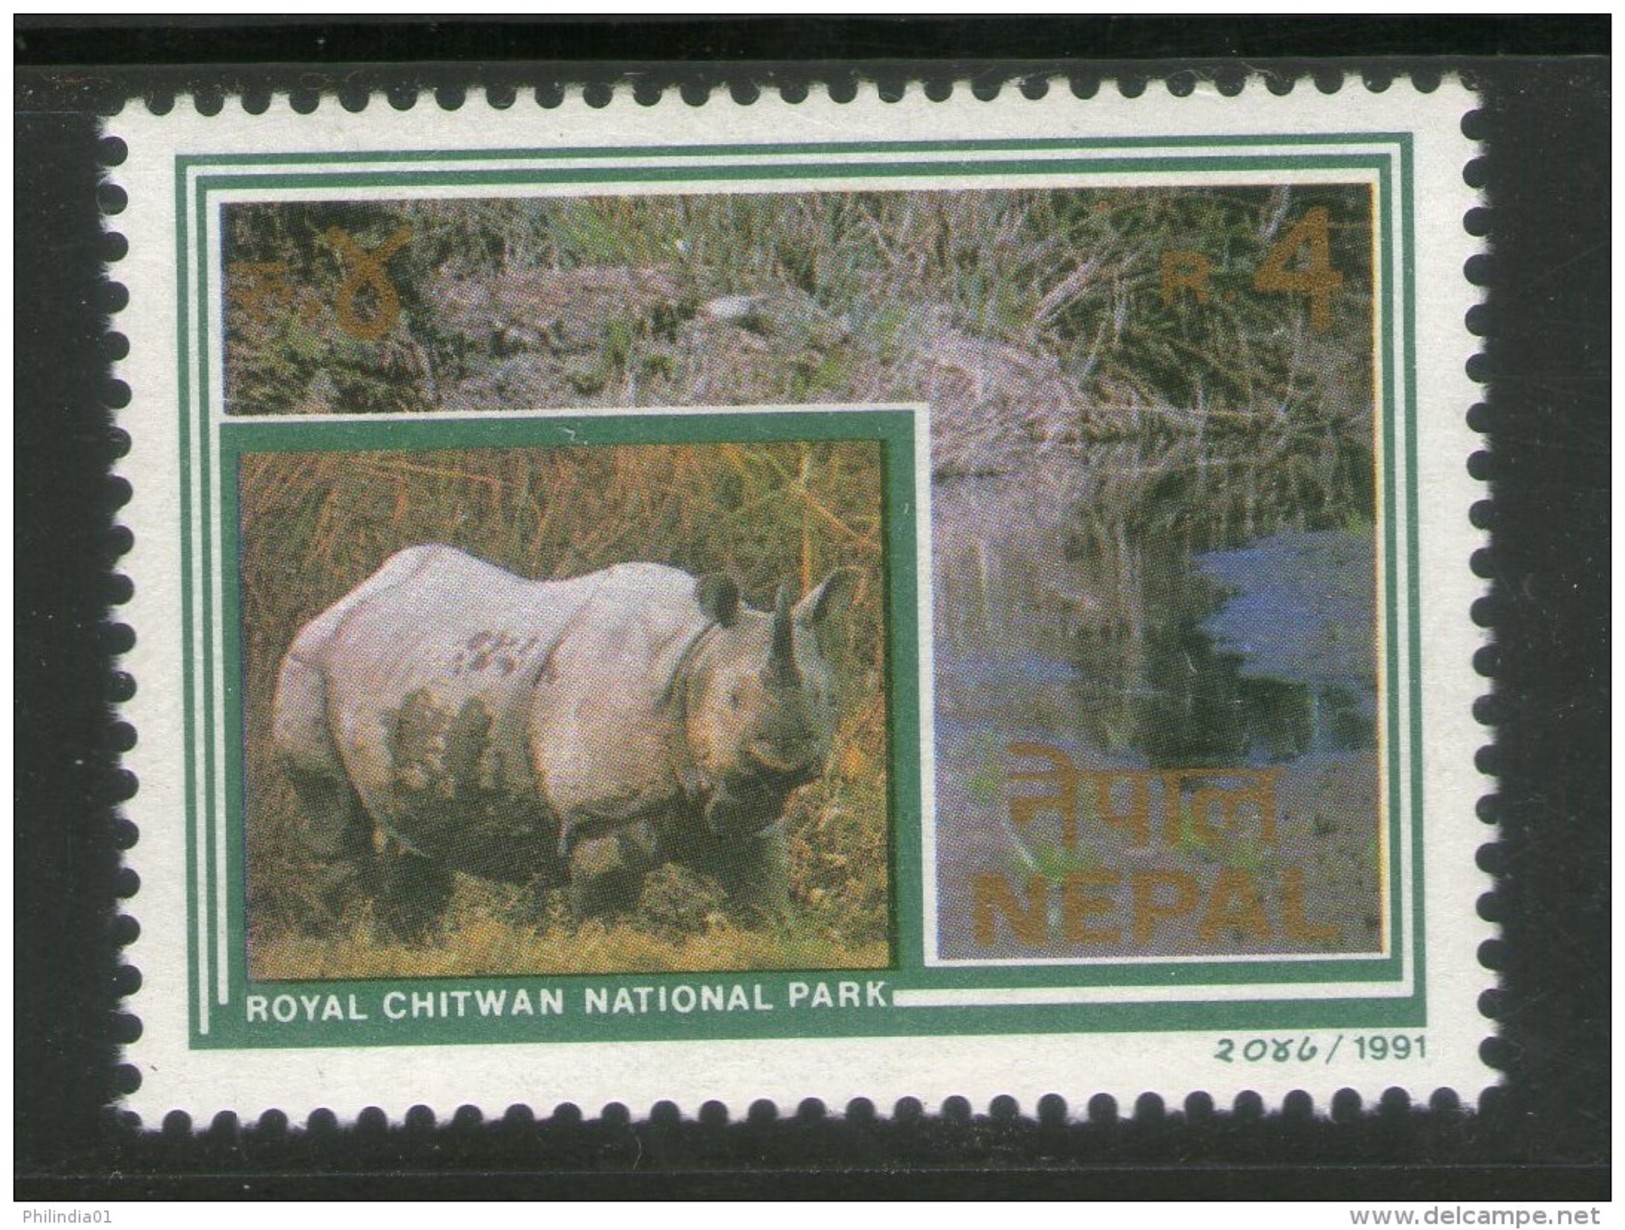 Nepal 1990 Royal Chitwan National Park Rhino Wildlife Animals Sc 488 MNH # 3335 - Rhinozerosse